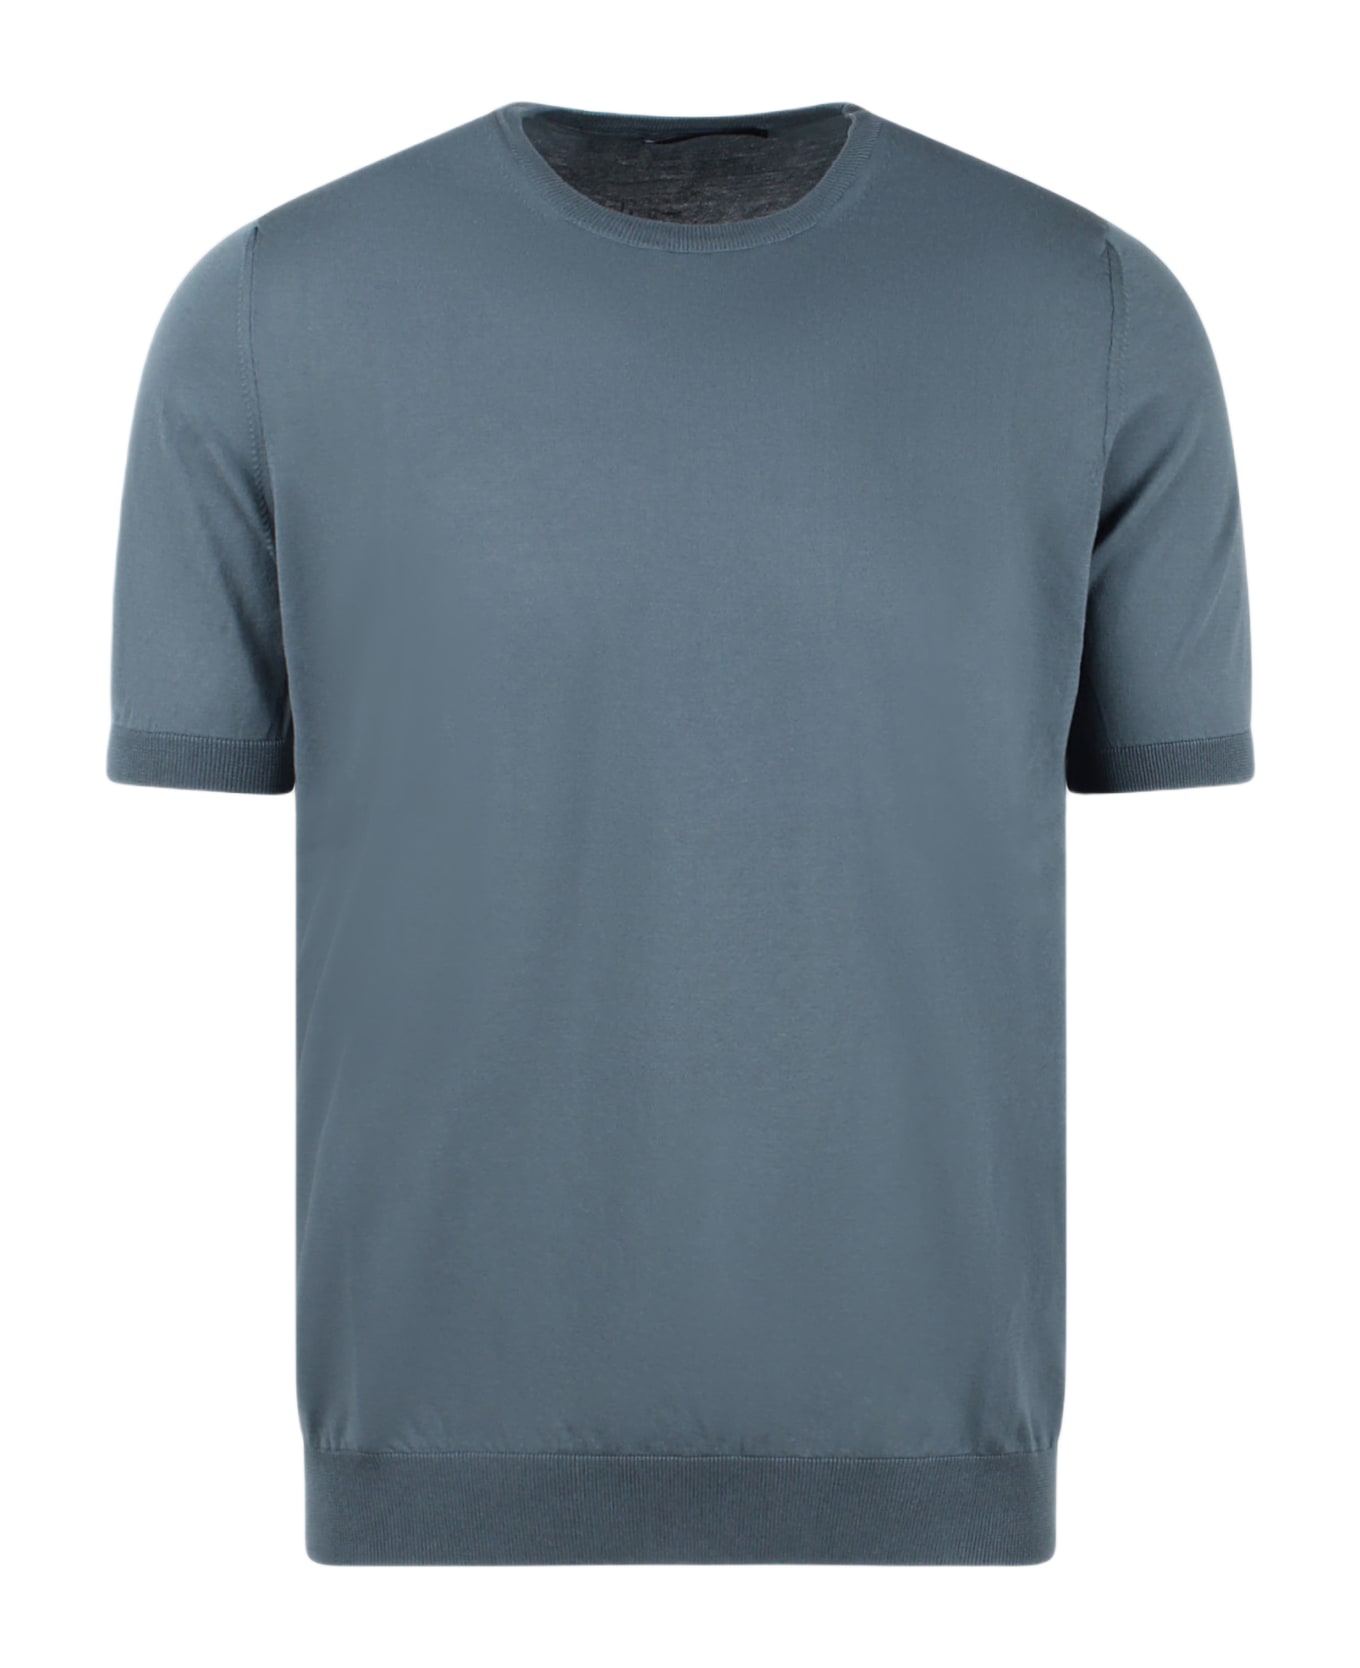 Tagliatore Cotton Knit T-shirt - Blue